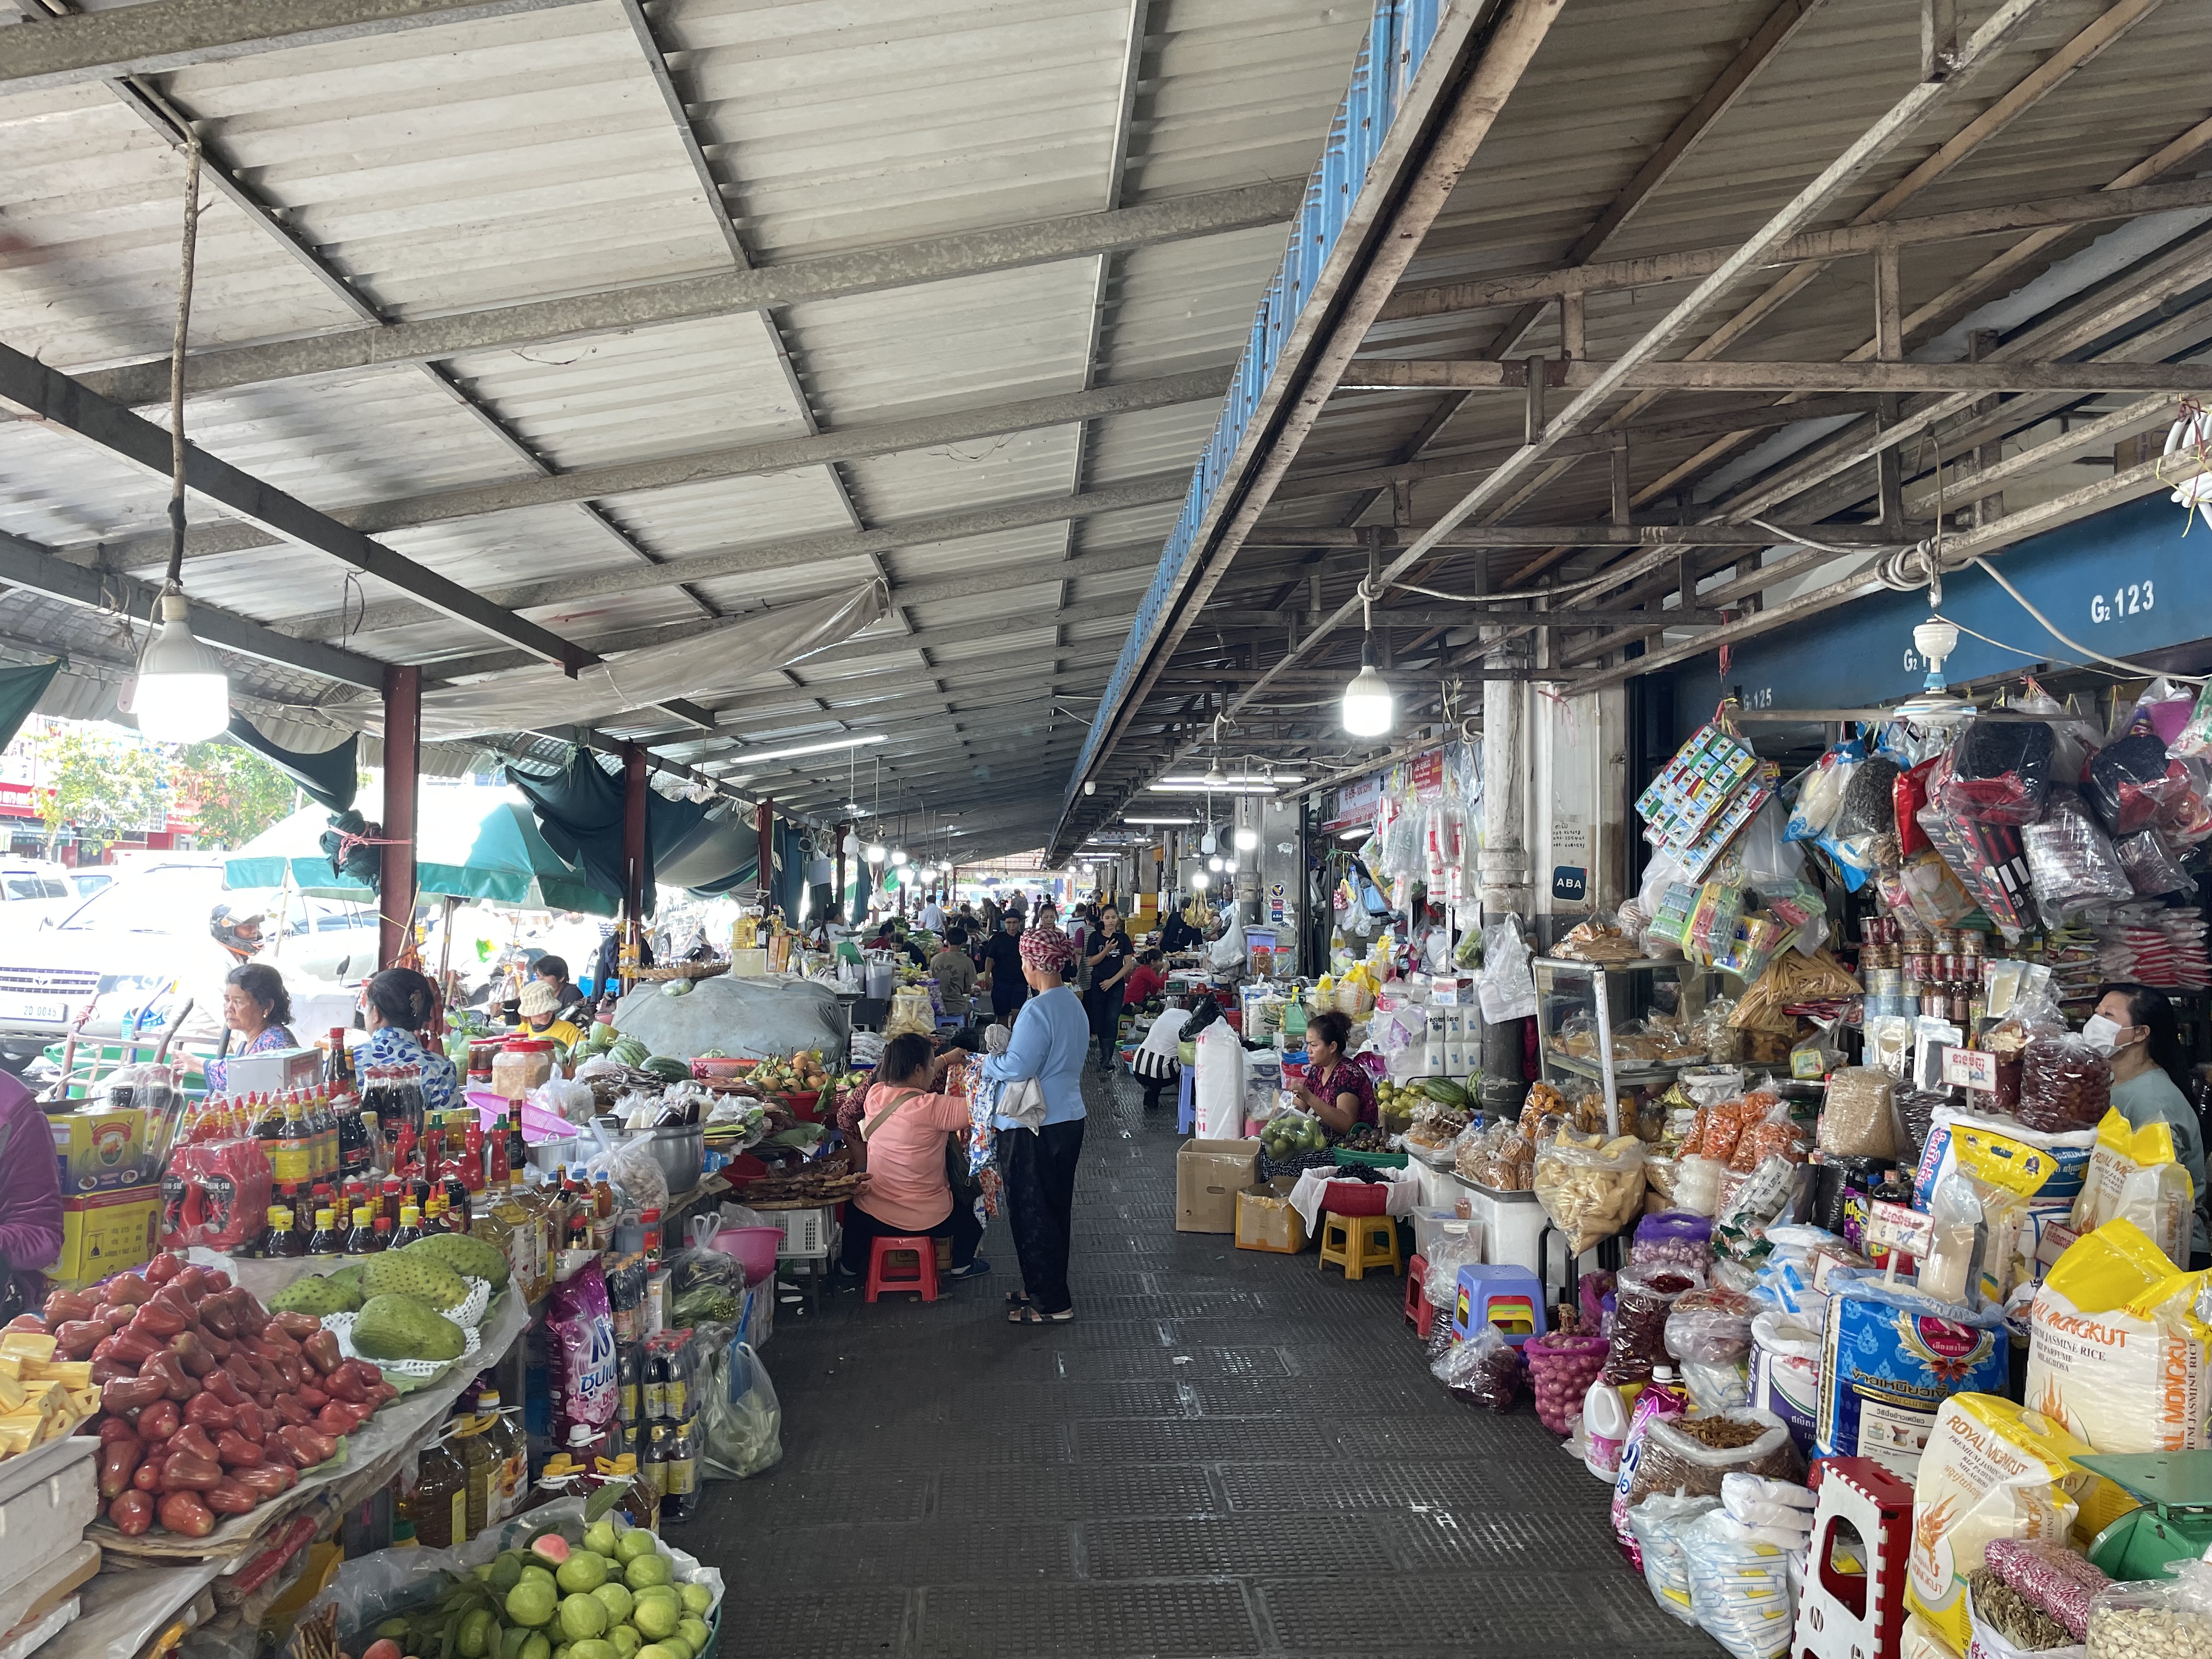 Outskirts of market.